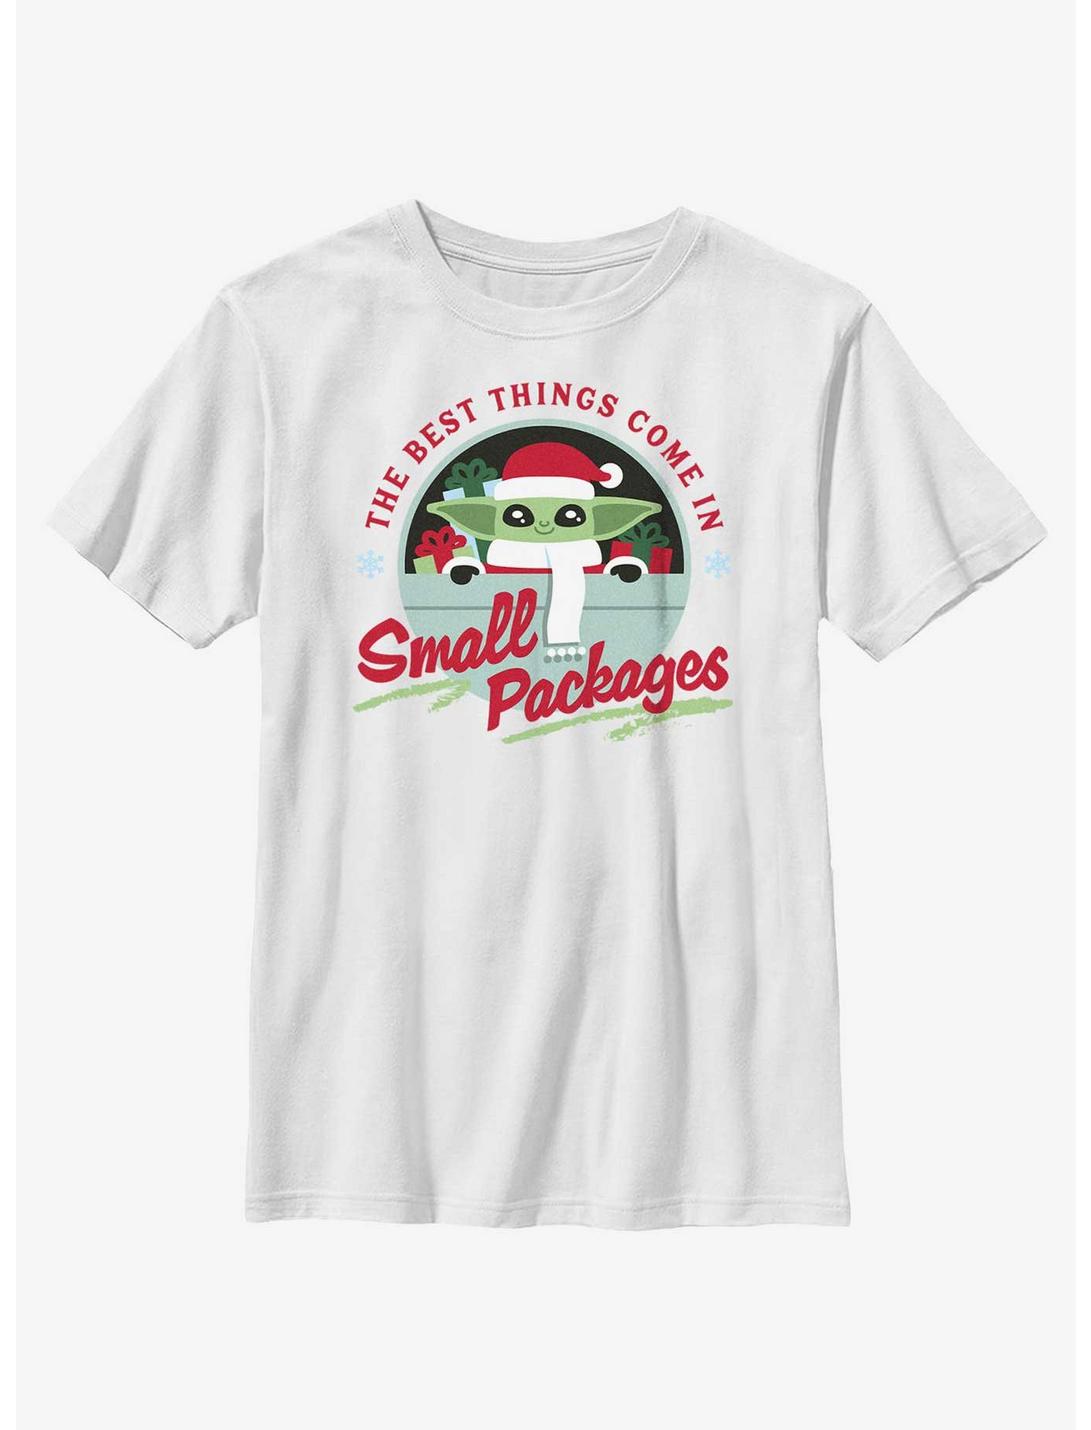 Star Wars The Mandalorian Santa Grogu Small Packages Youth T-Shirt, WHITE, hi-res